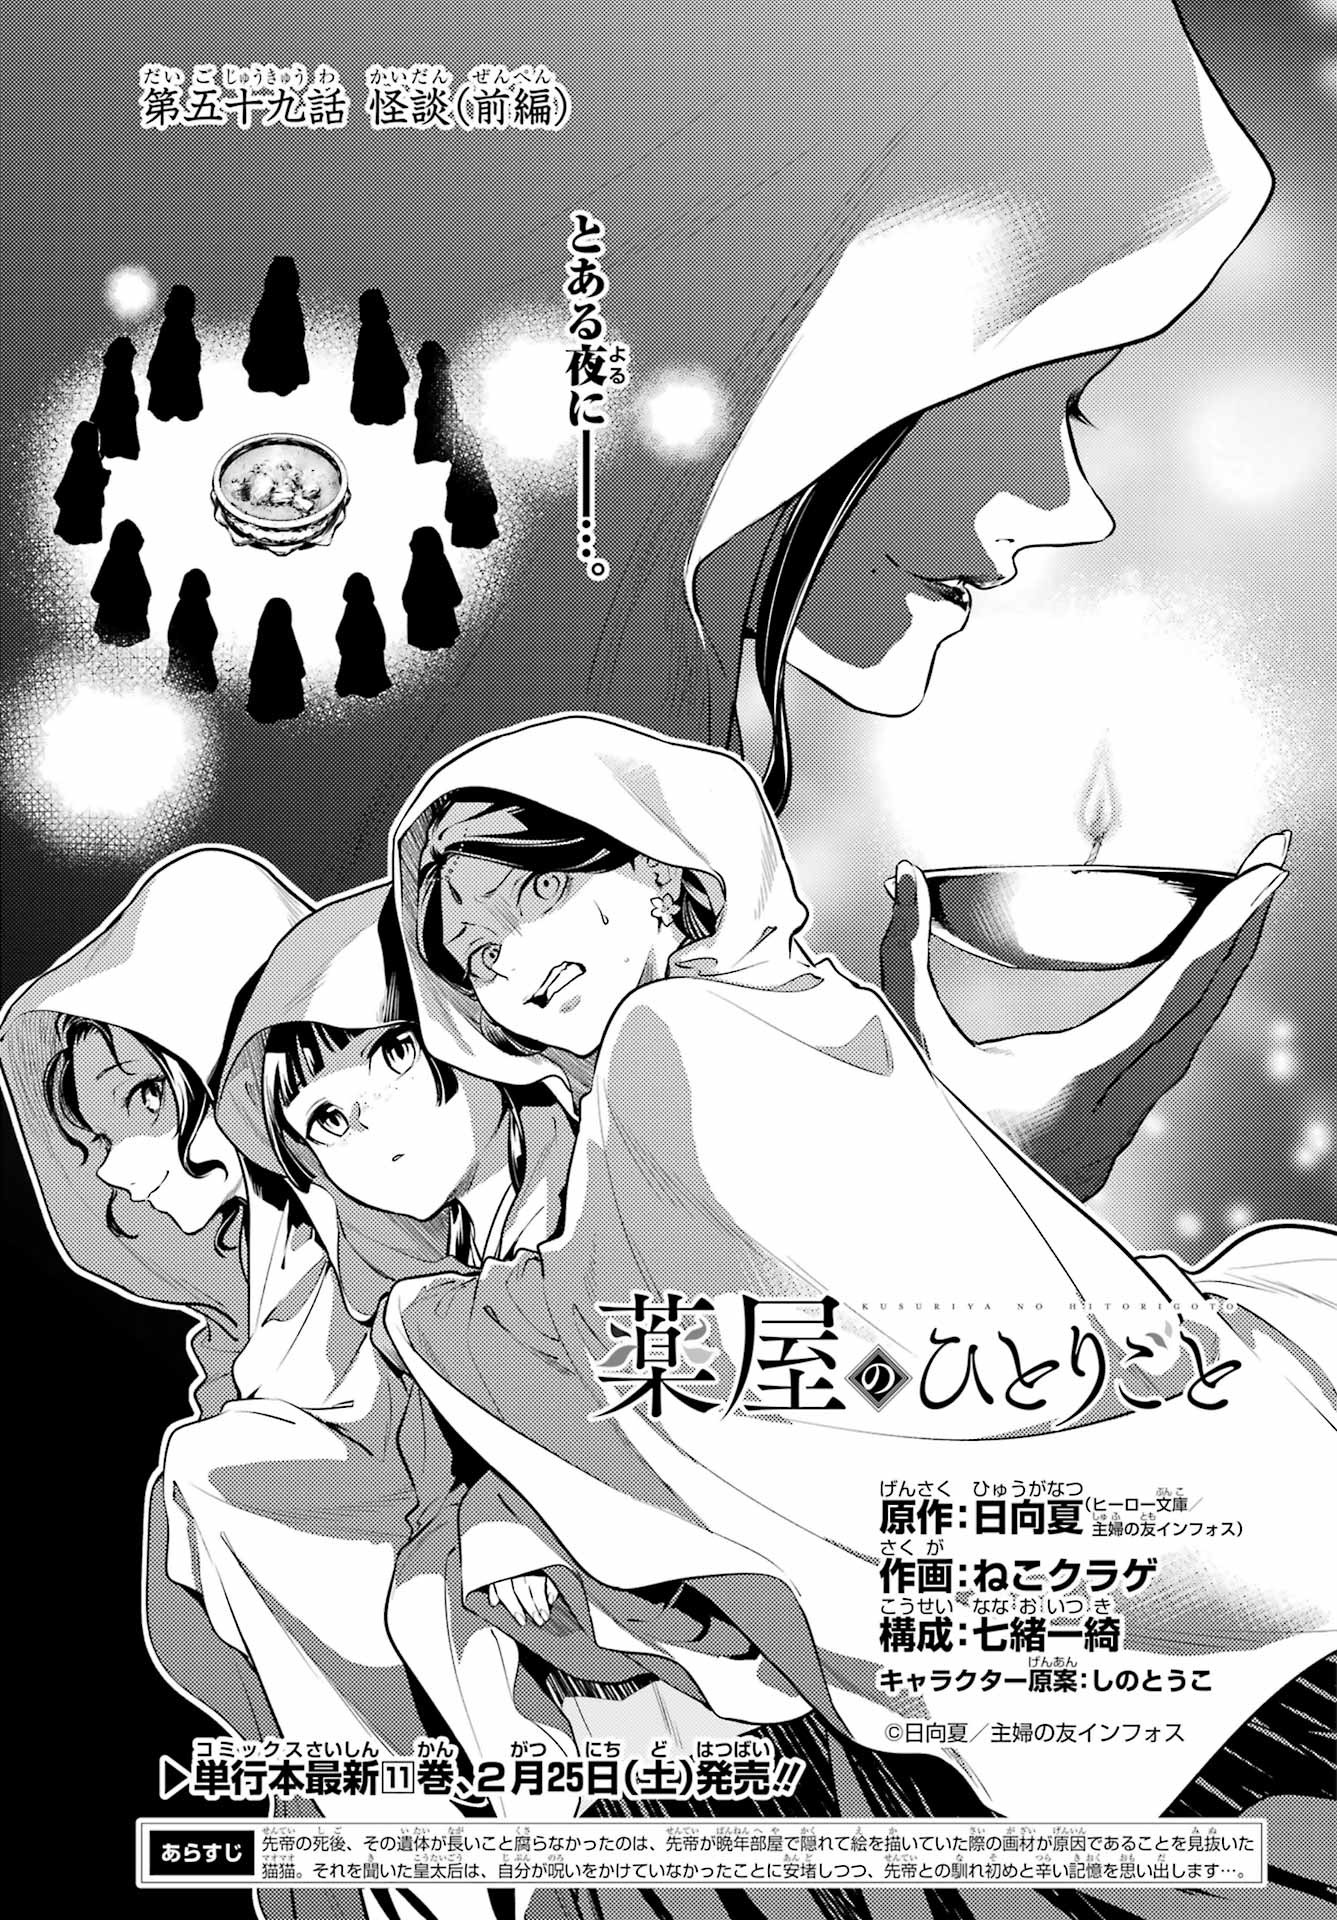 Kusuriya no Hitorigoto - Chapter 59-1 - Page 1